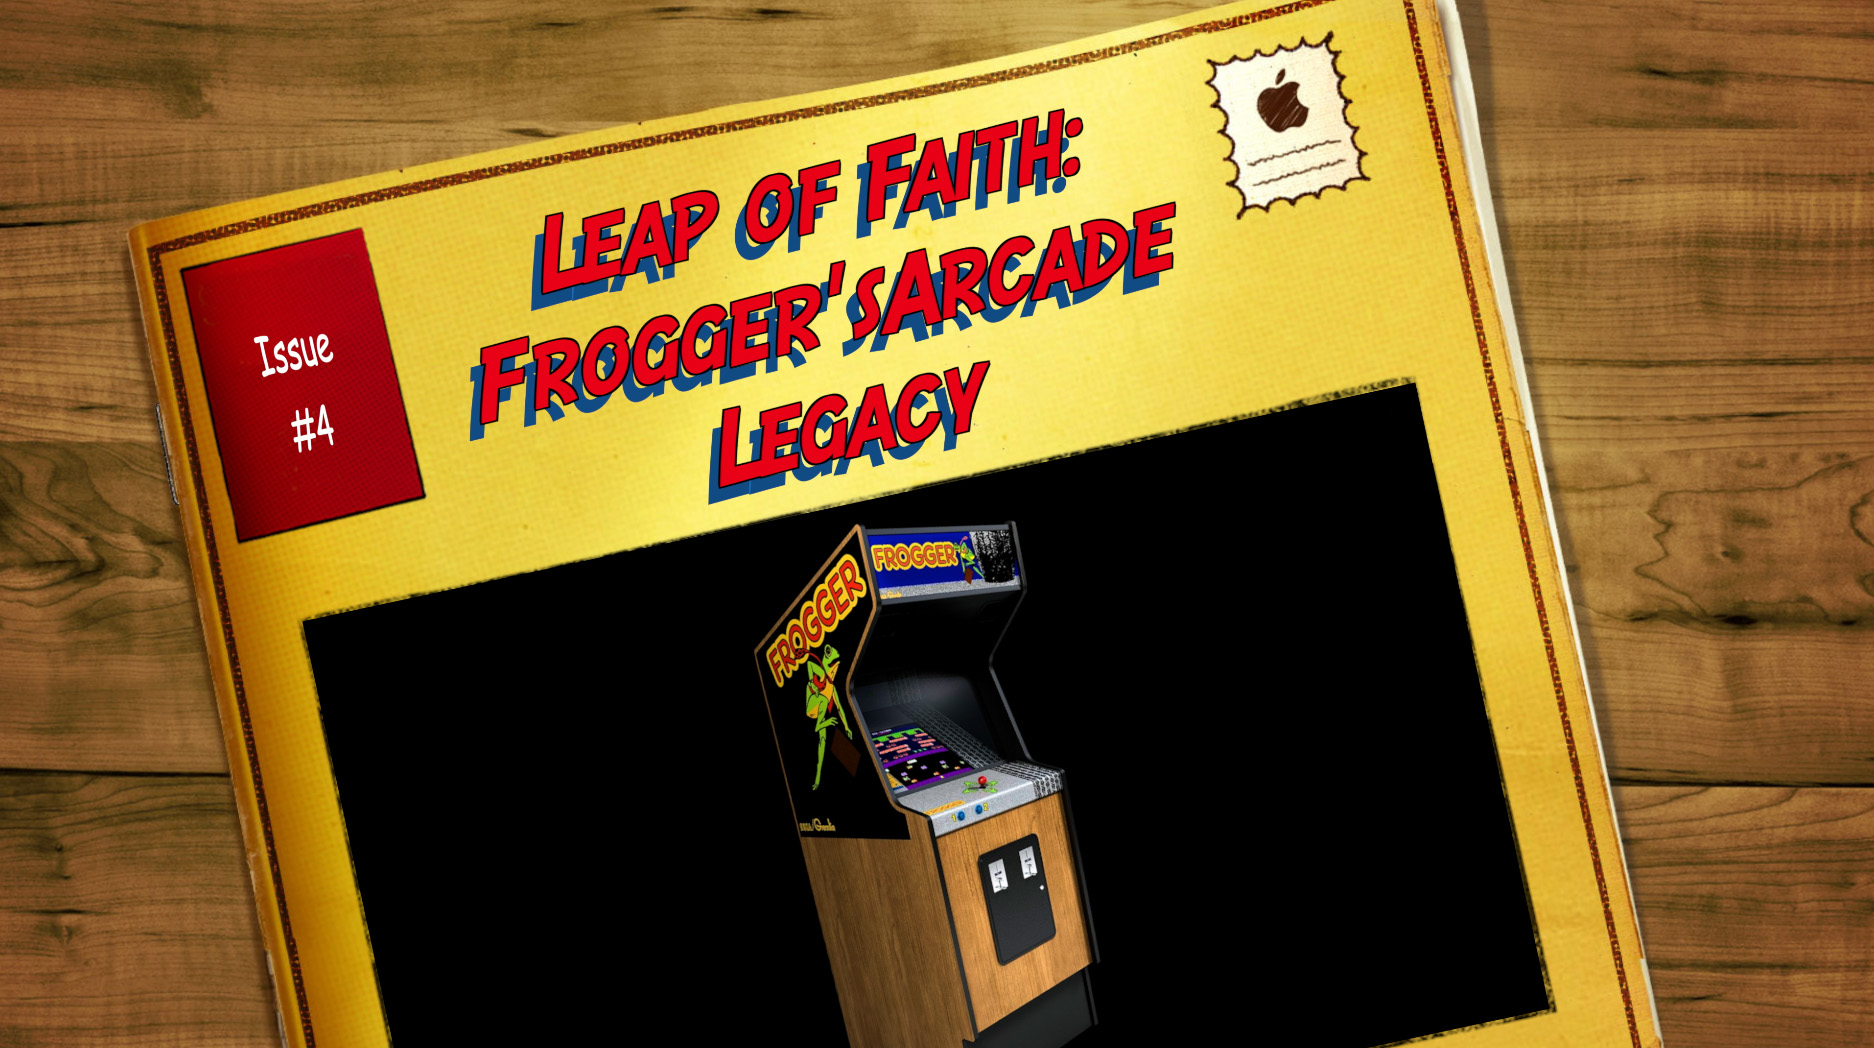  Issue #4 Leap of Faith: Frogger’s Arcade Legacy